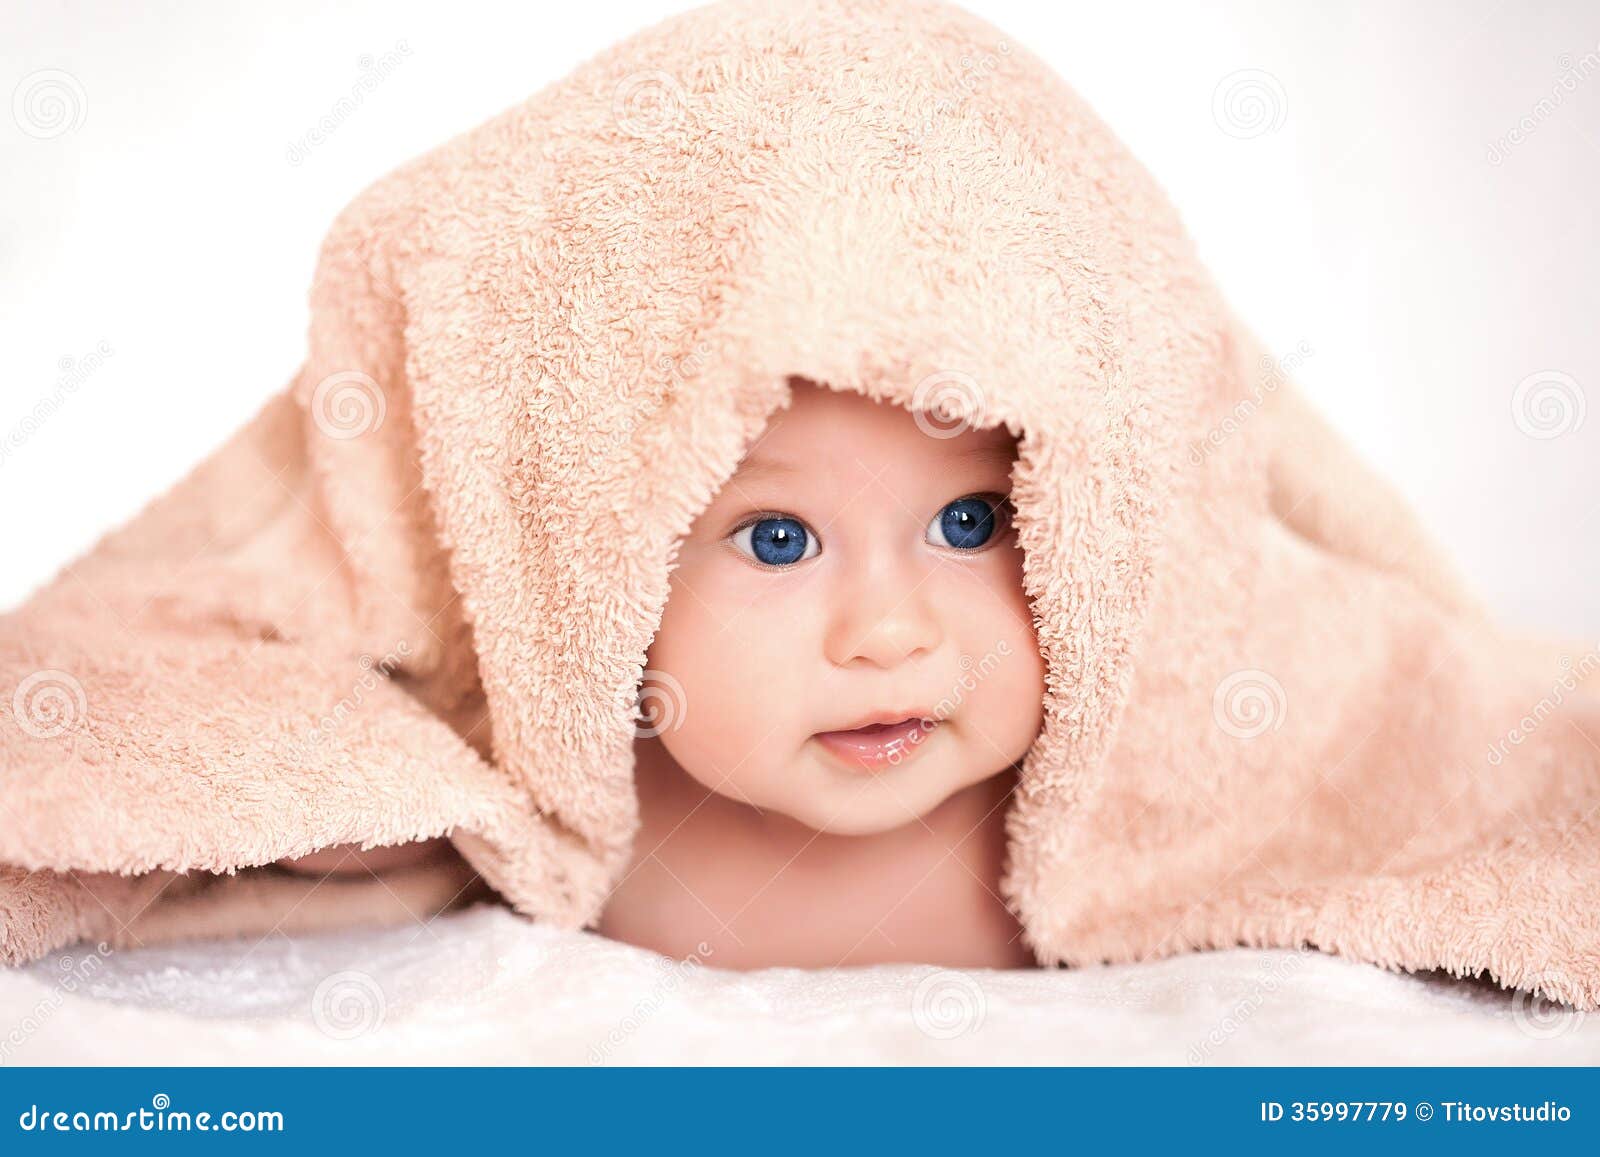 Baby girl is hiding under the beige terry towel Royalty Free Stock Images - baby-girl-hiding-under-beige-terry-towel-blanket-35997779